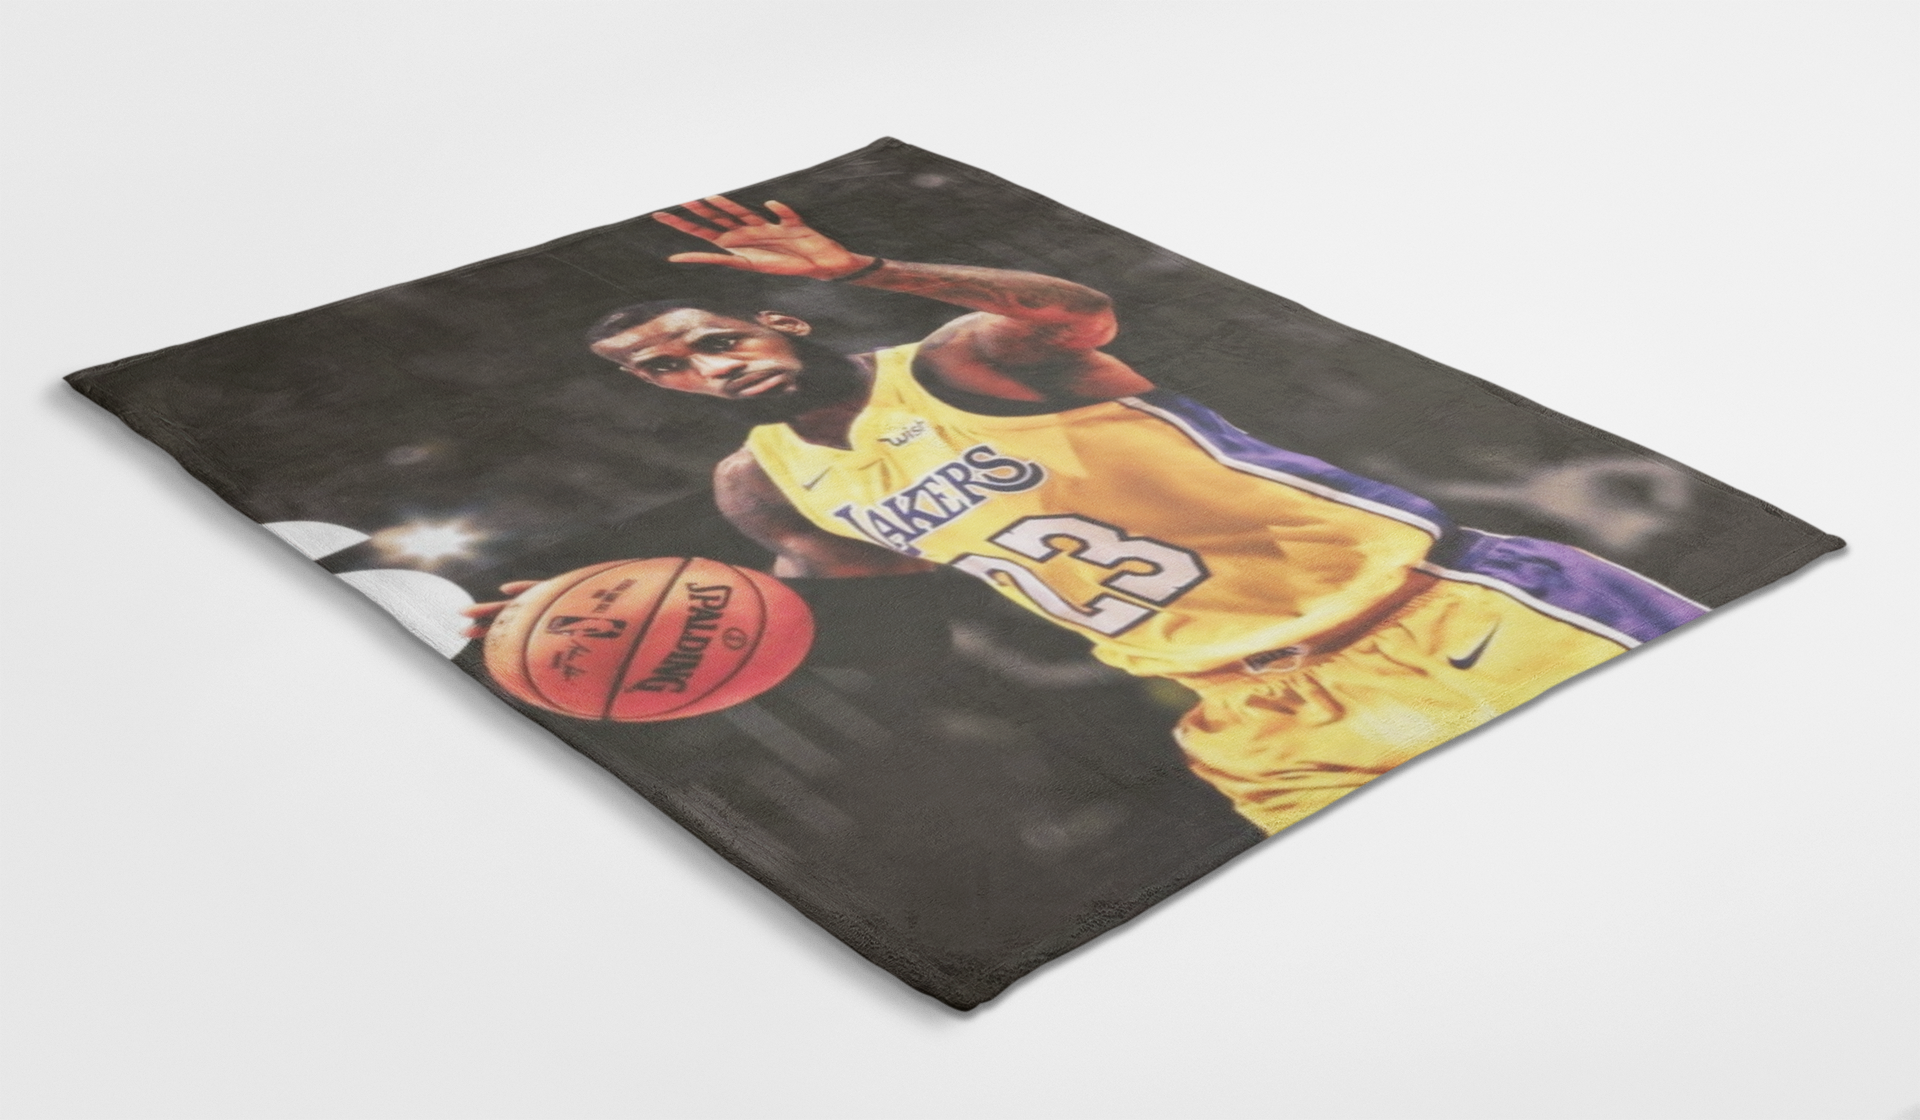 Lebron James Lakers Blanket